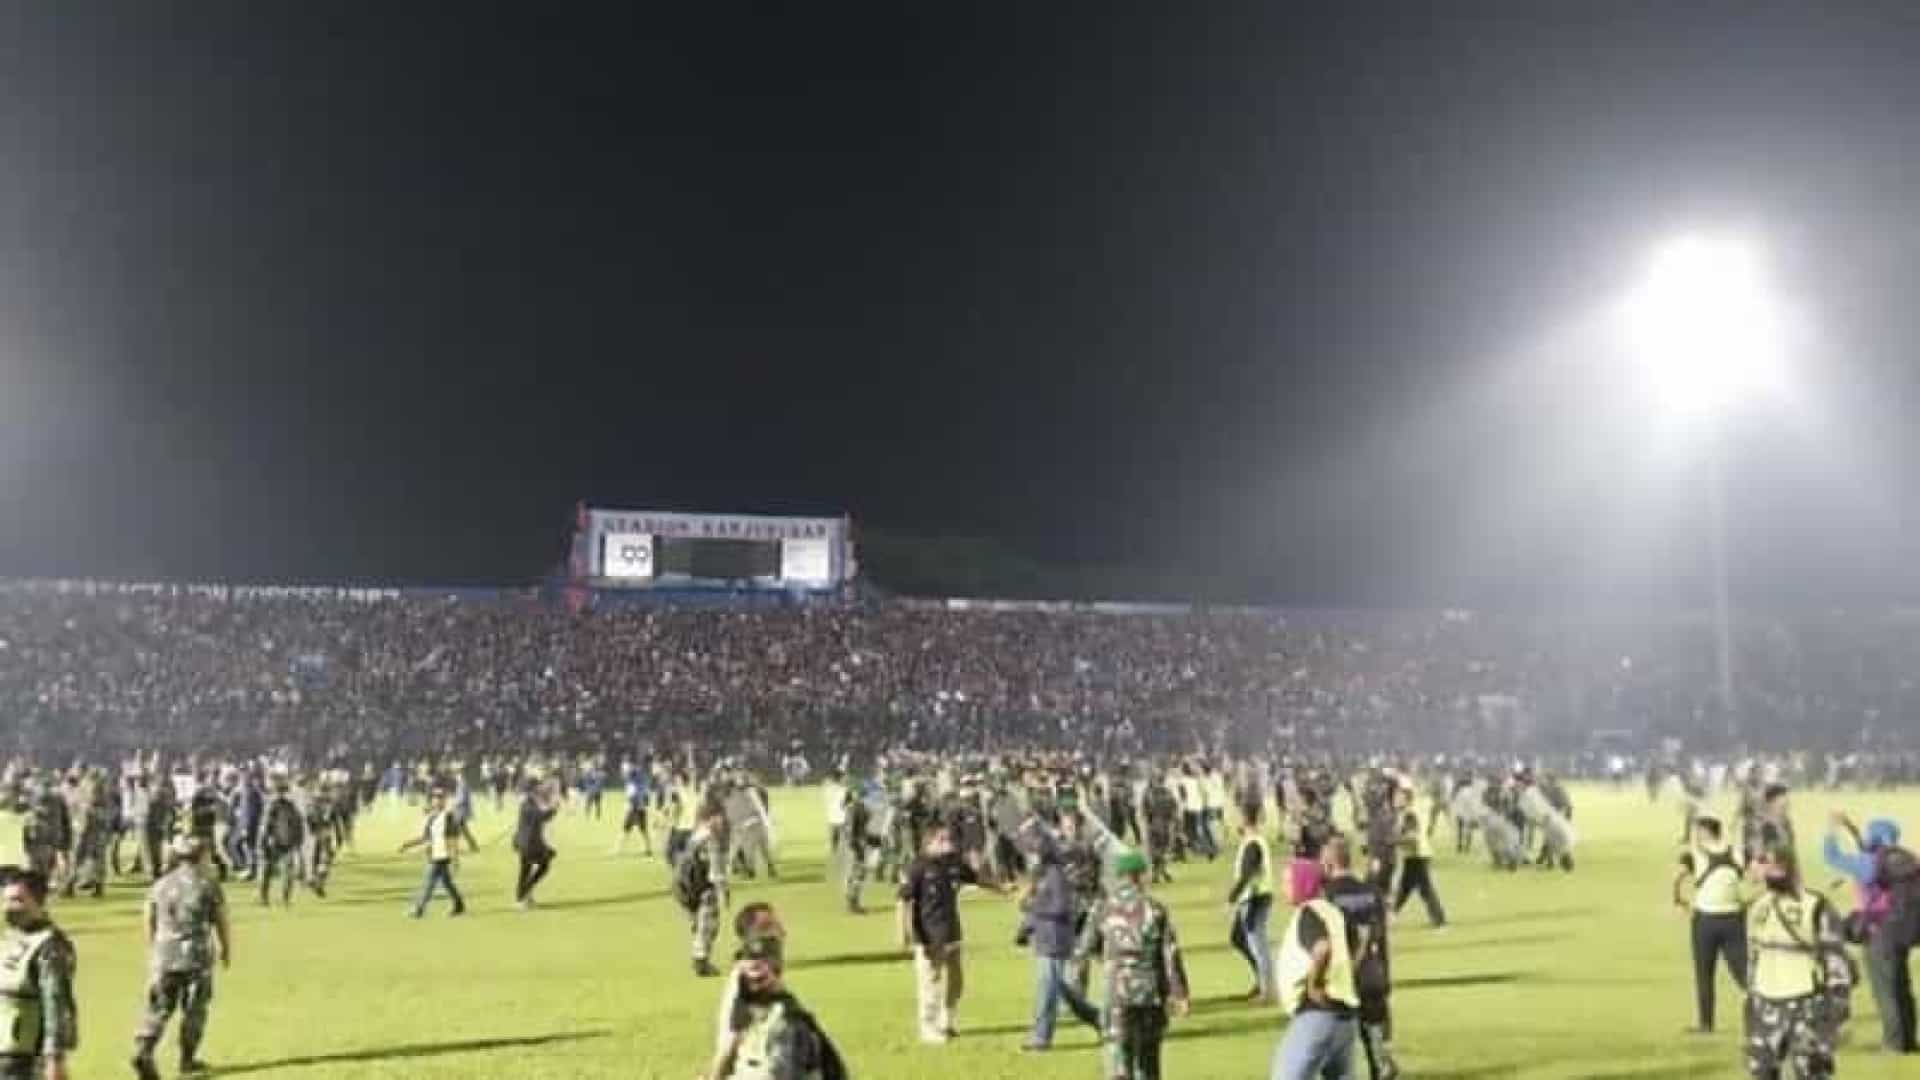 Ordenada auditoria a todos os estádios pelo Presidente da Indonésia